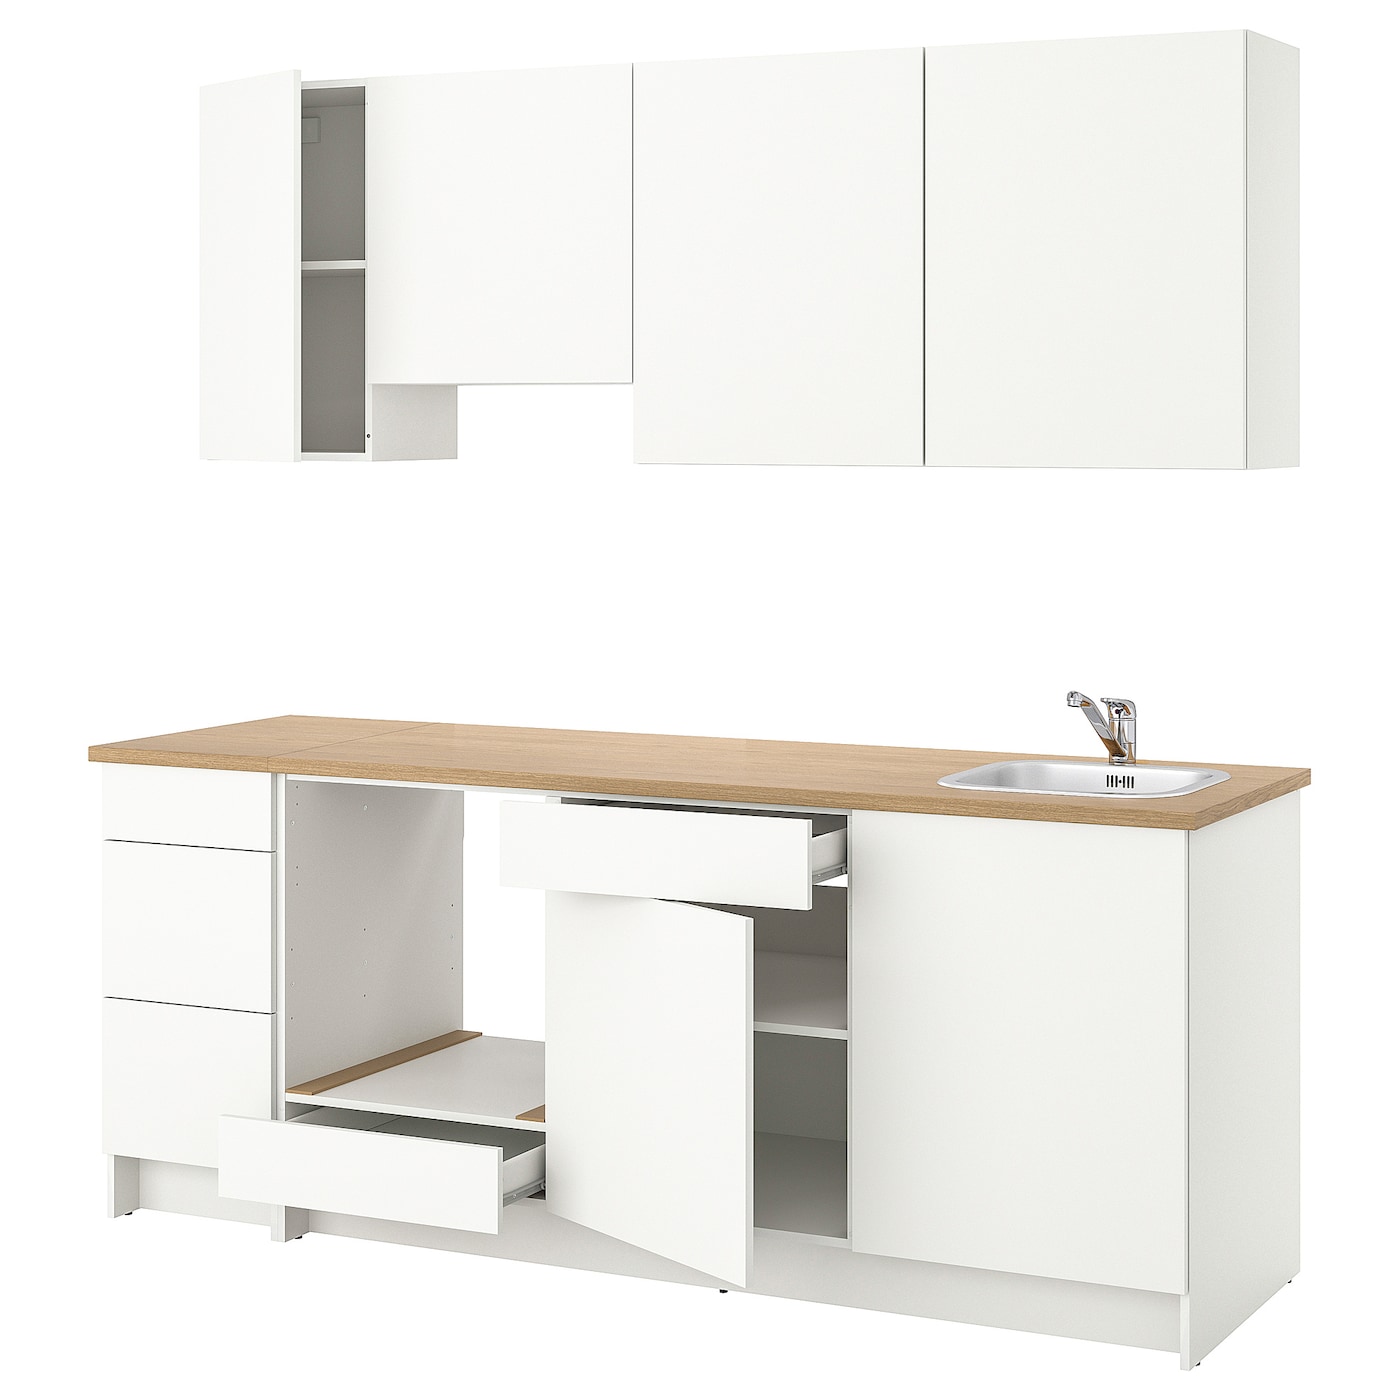 Кухонная комбинация для хранения - KNOXHULT IKEA/ КНОКСХУЛЬТ ИКЕА, 220х61х220 см, белый/бежевый